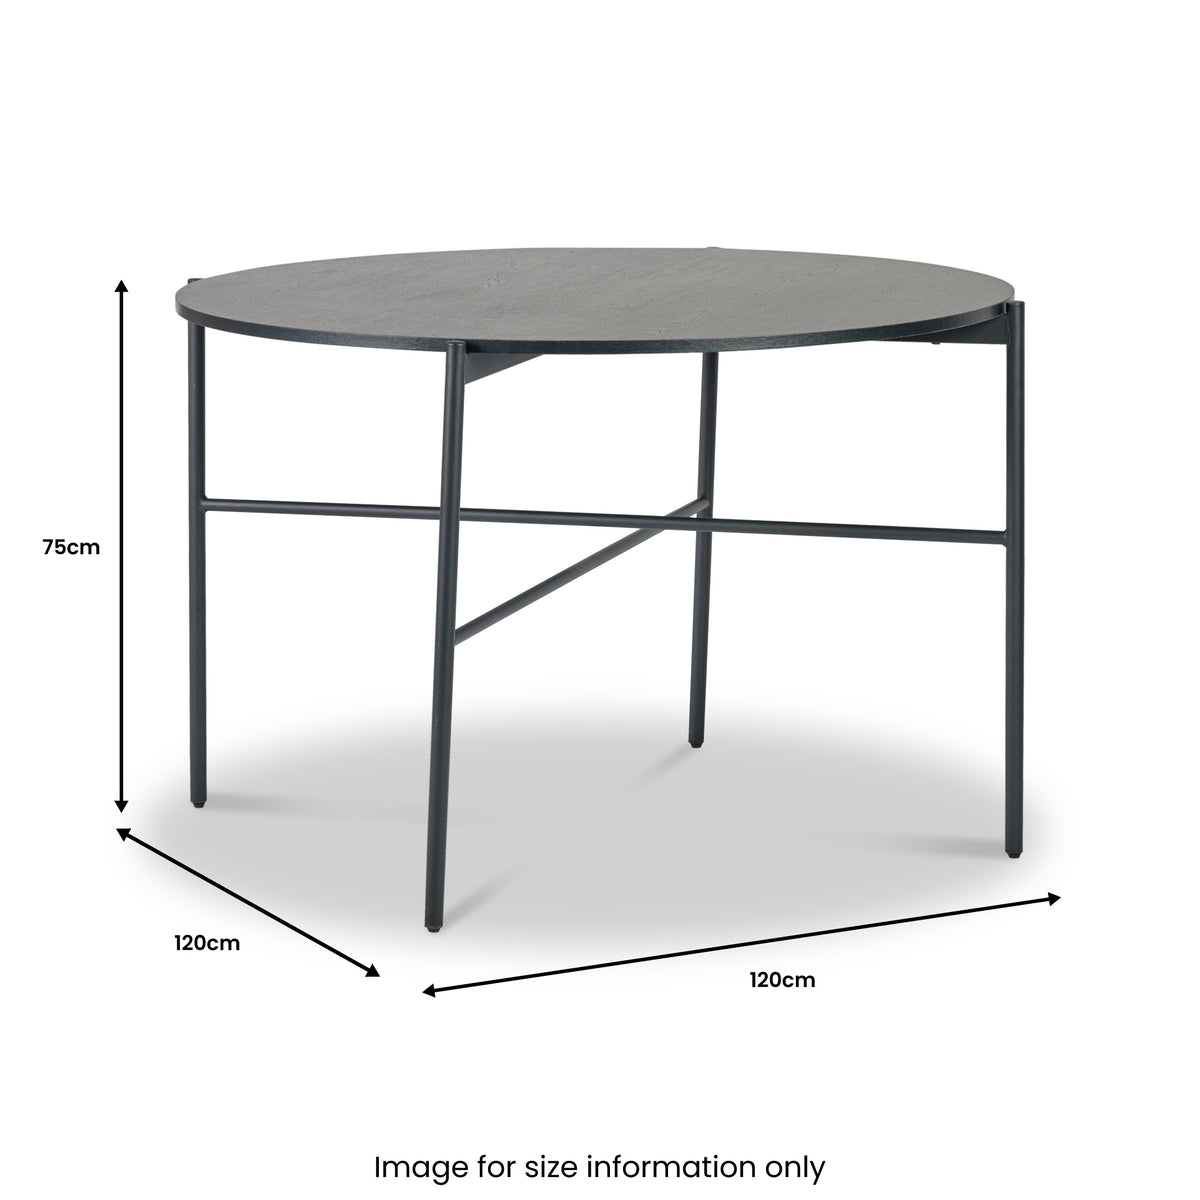 Austin 120cm Black Dining Table dimensions